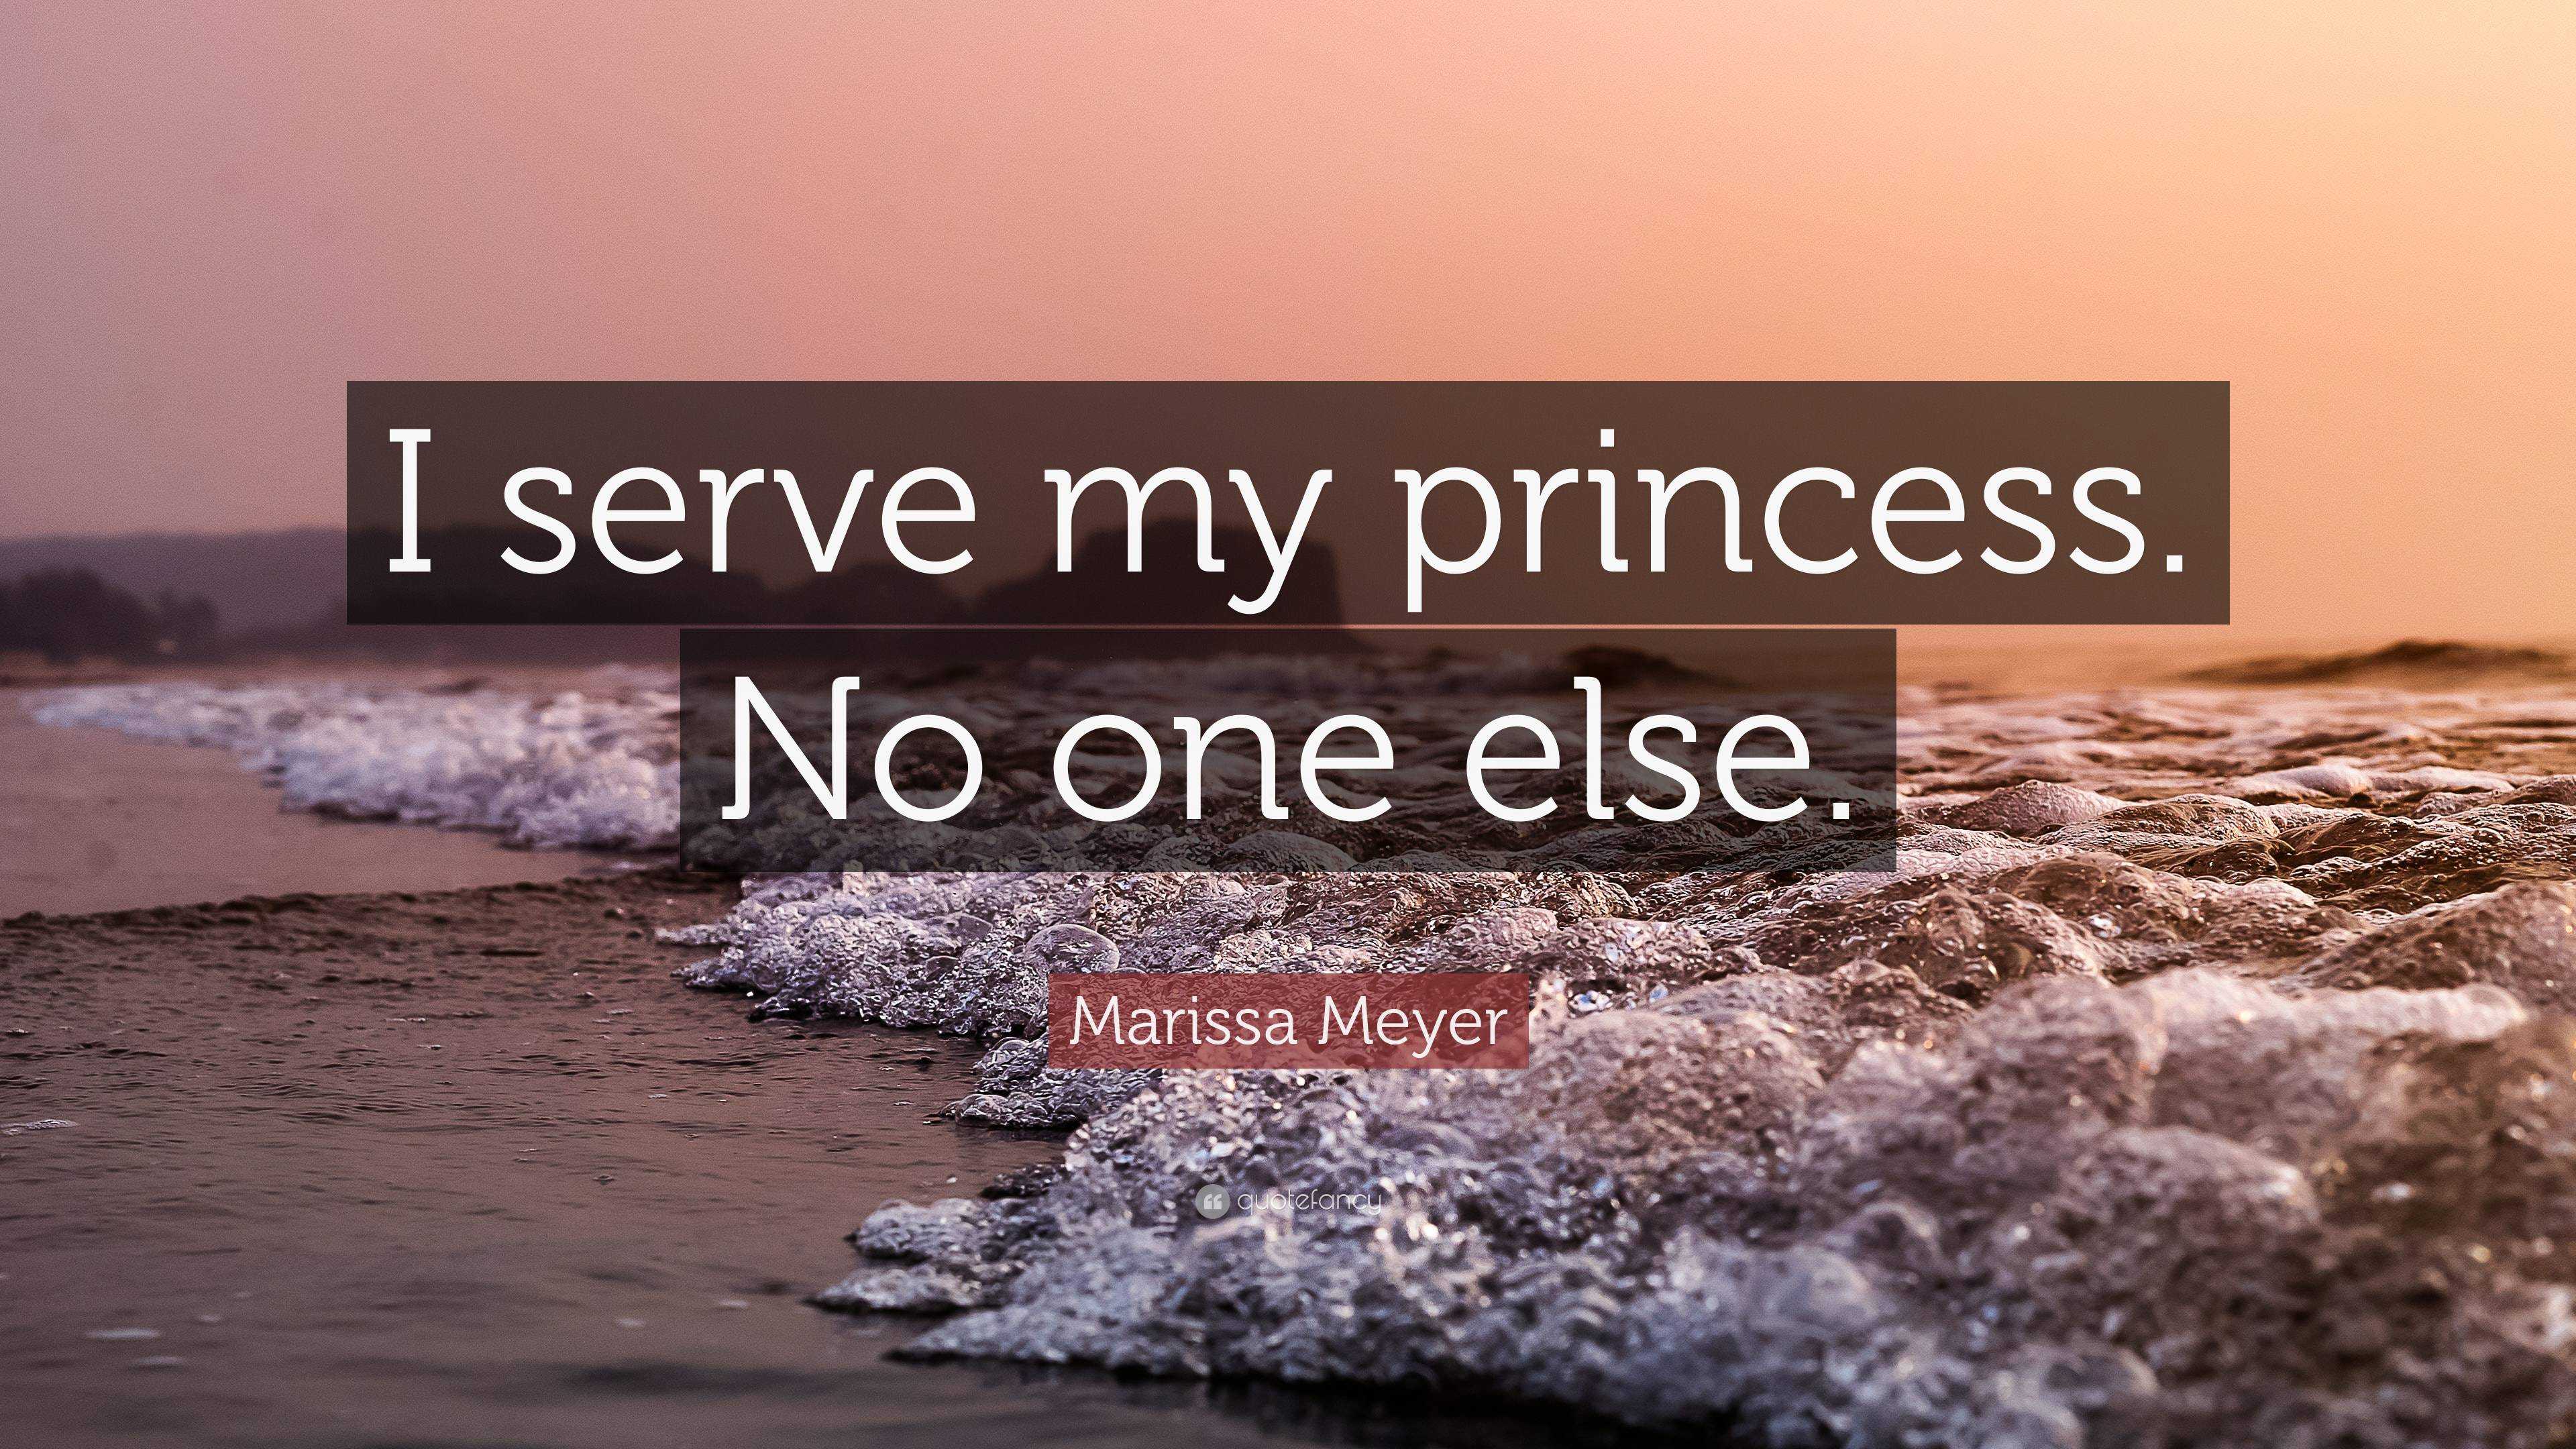 Marissa Meyer Quote: “I serve my princess. No one else.”